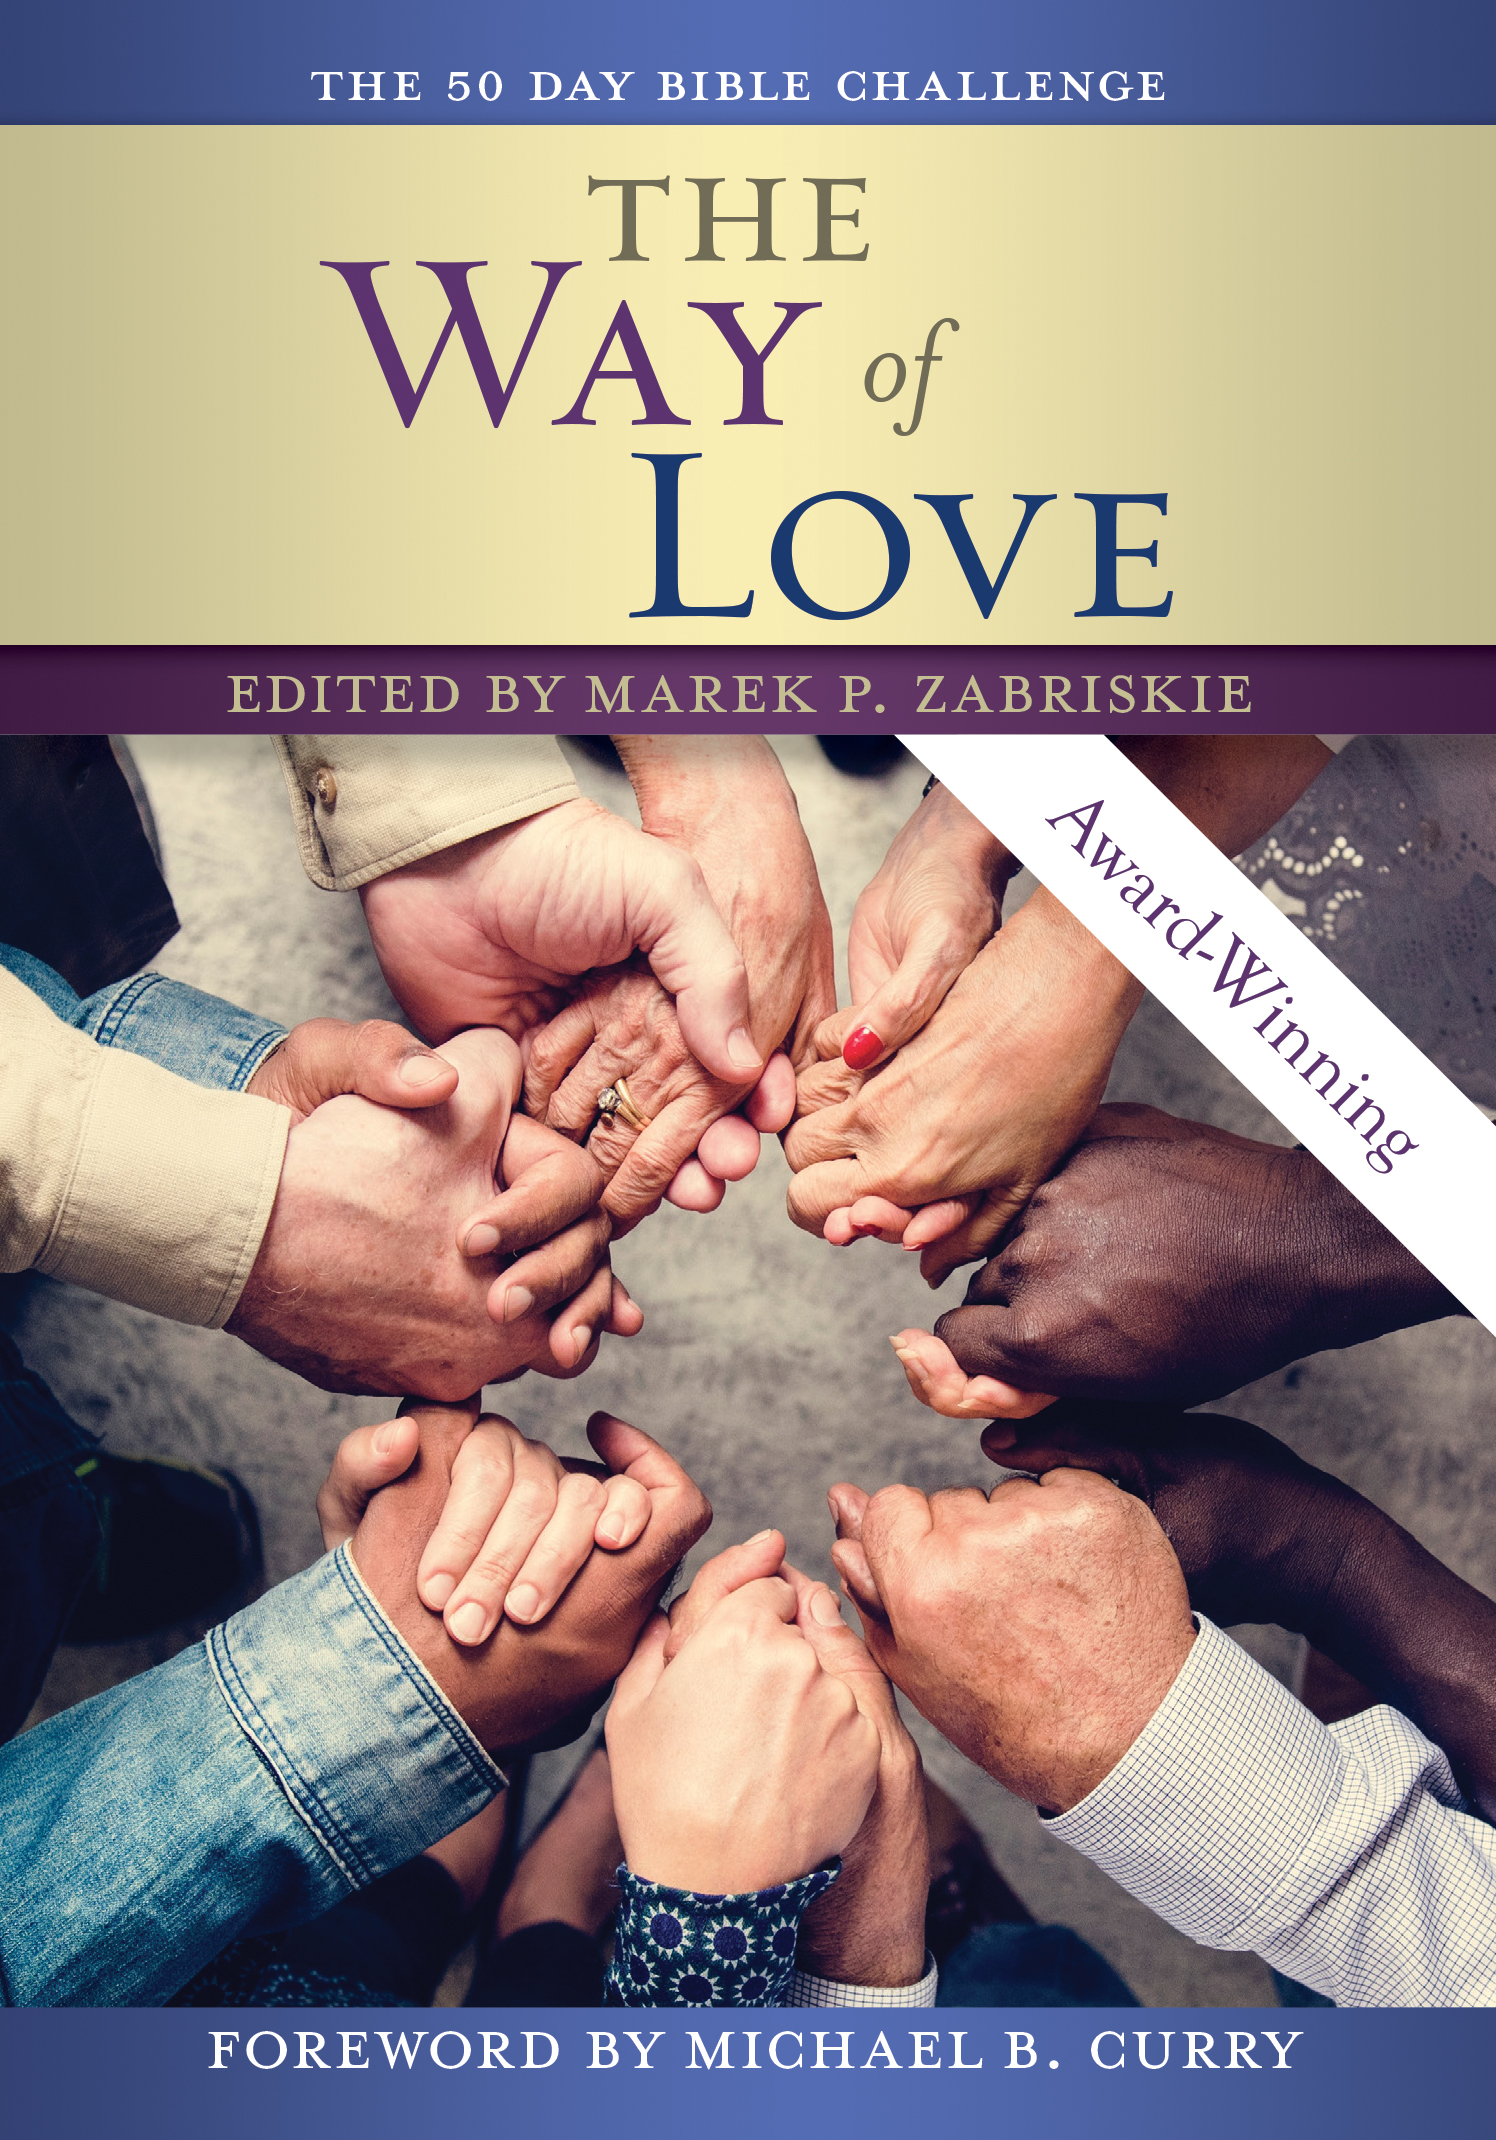 The Way of Love Bible Challenge